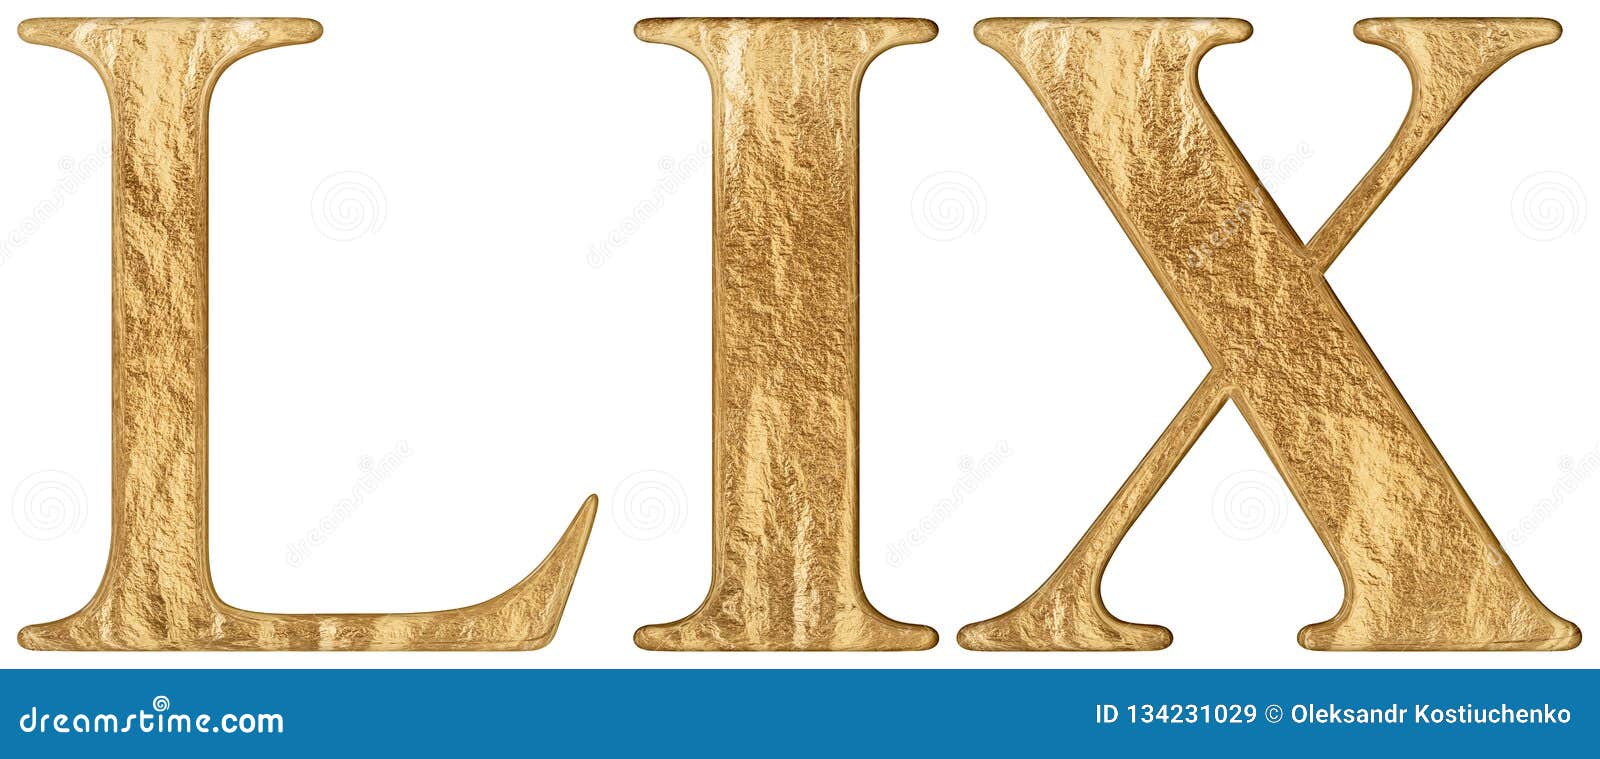 Roman numeral LIX, novem et quinquaginta, 59, fifty nine, isolated on white...